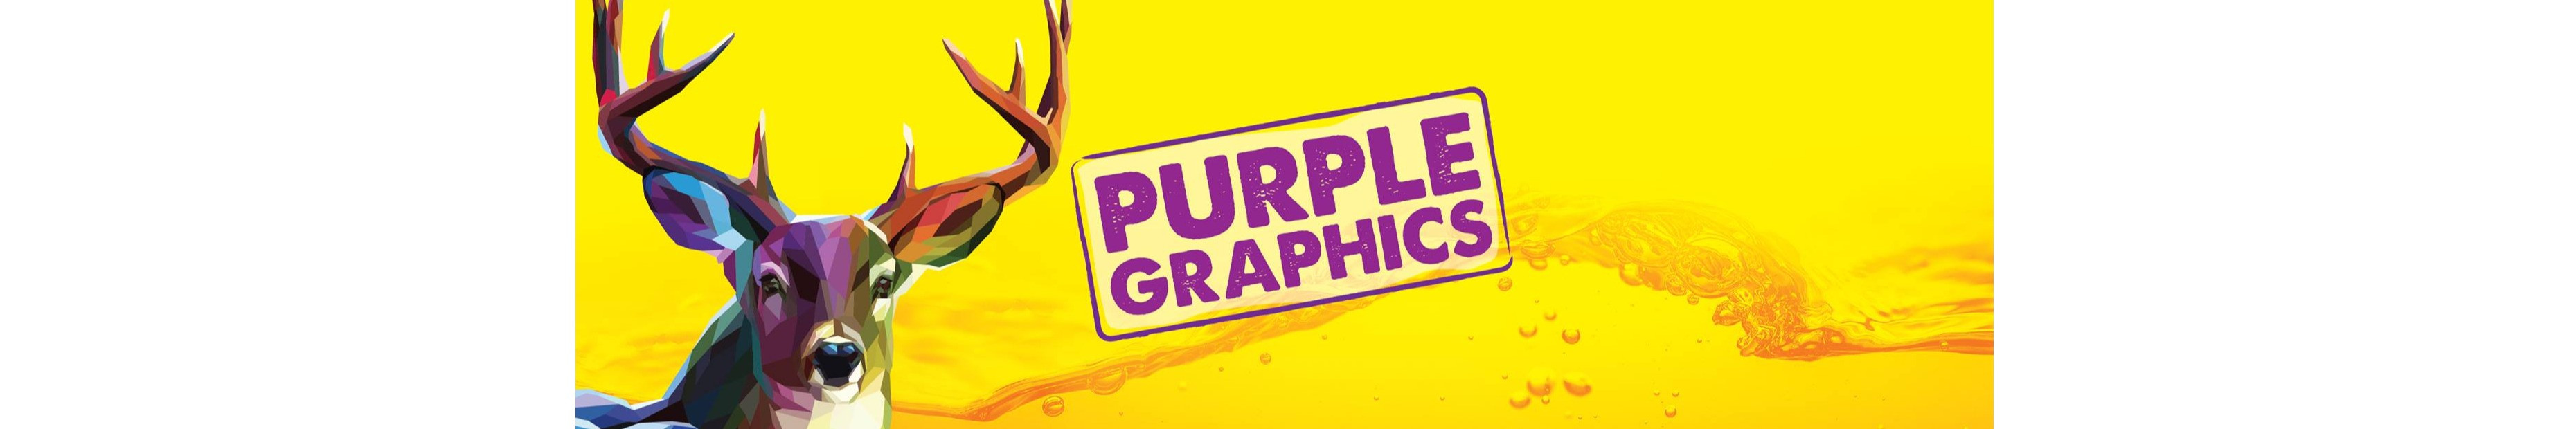 Purple Graphics - Vehicle Graphics & Signs